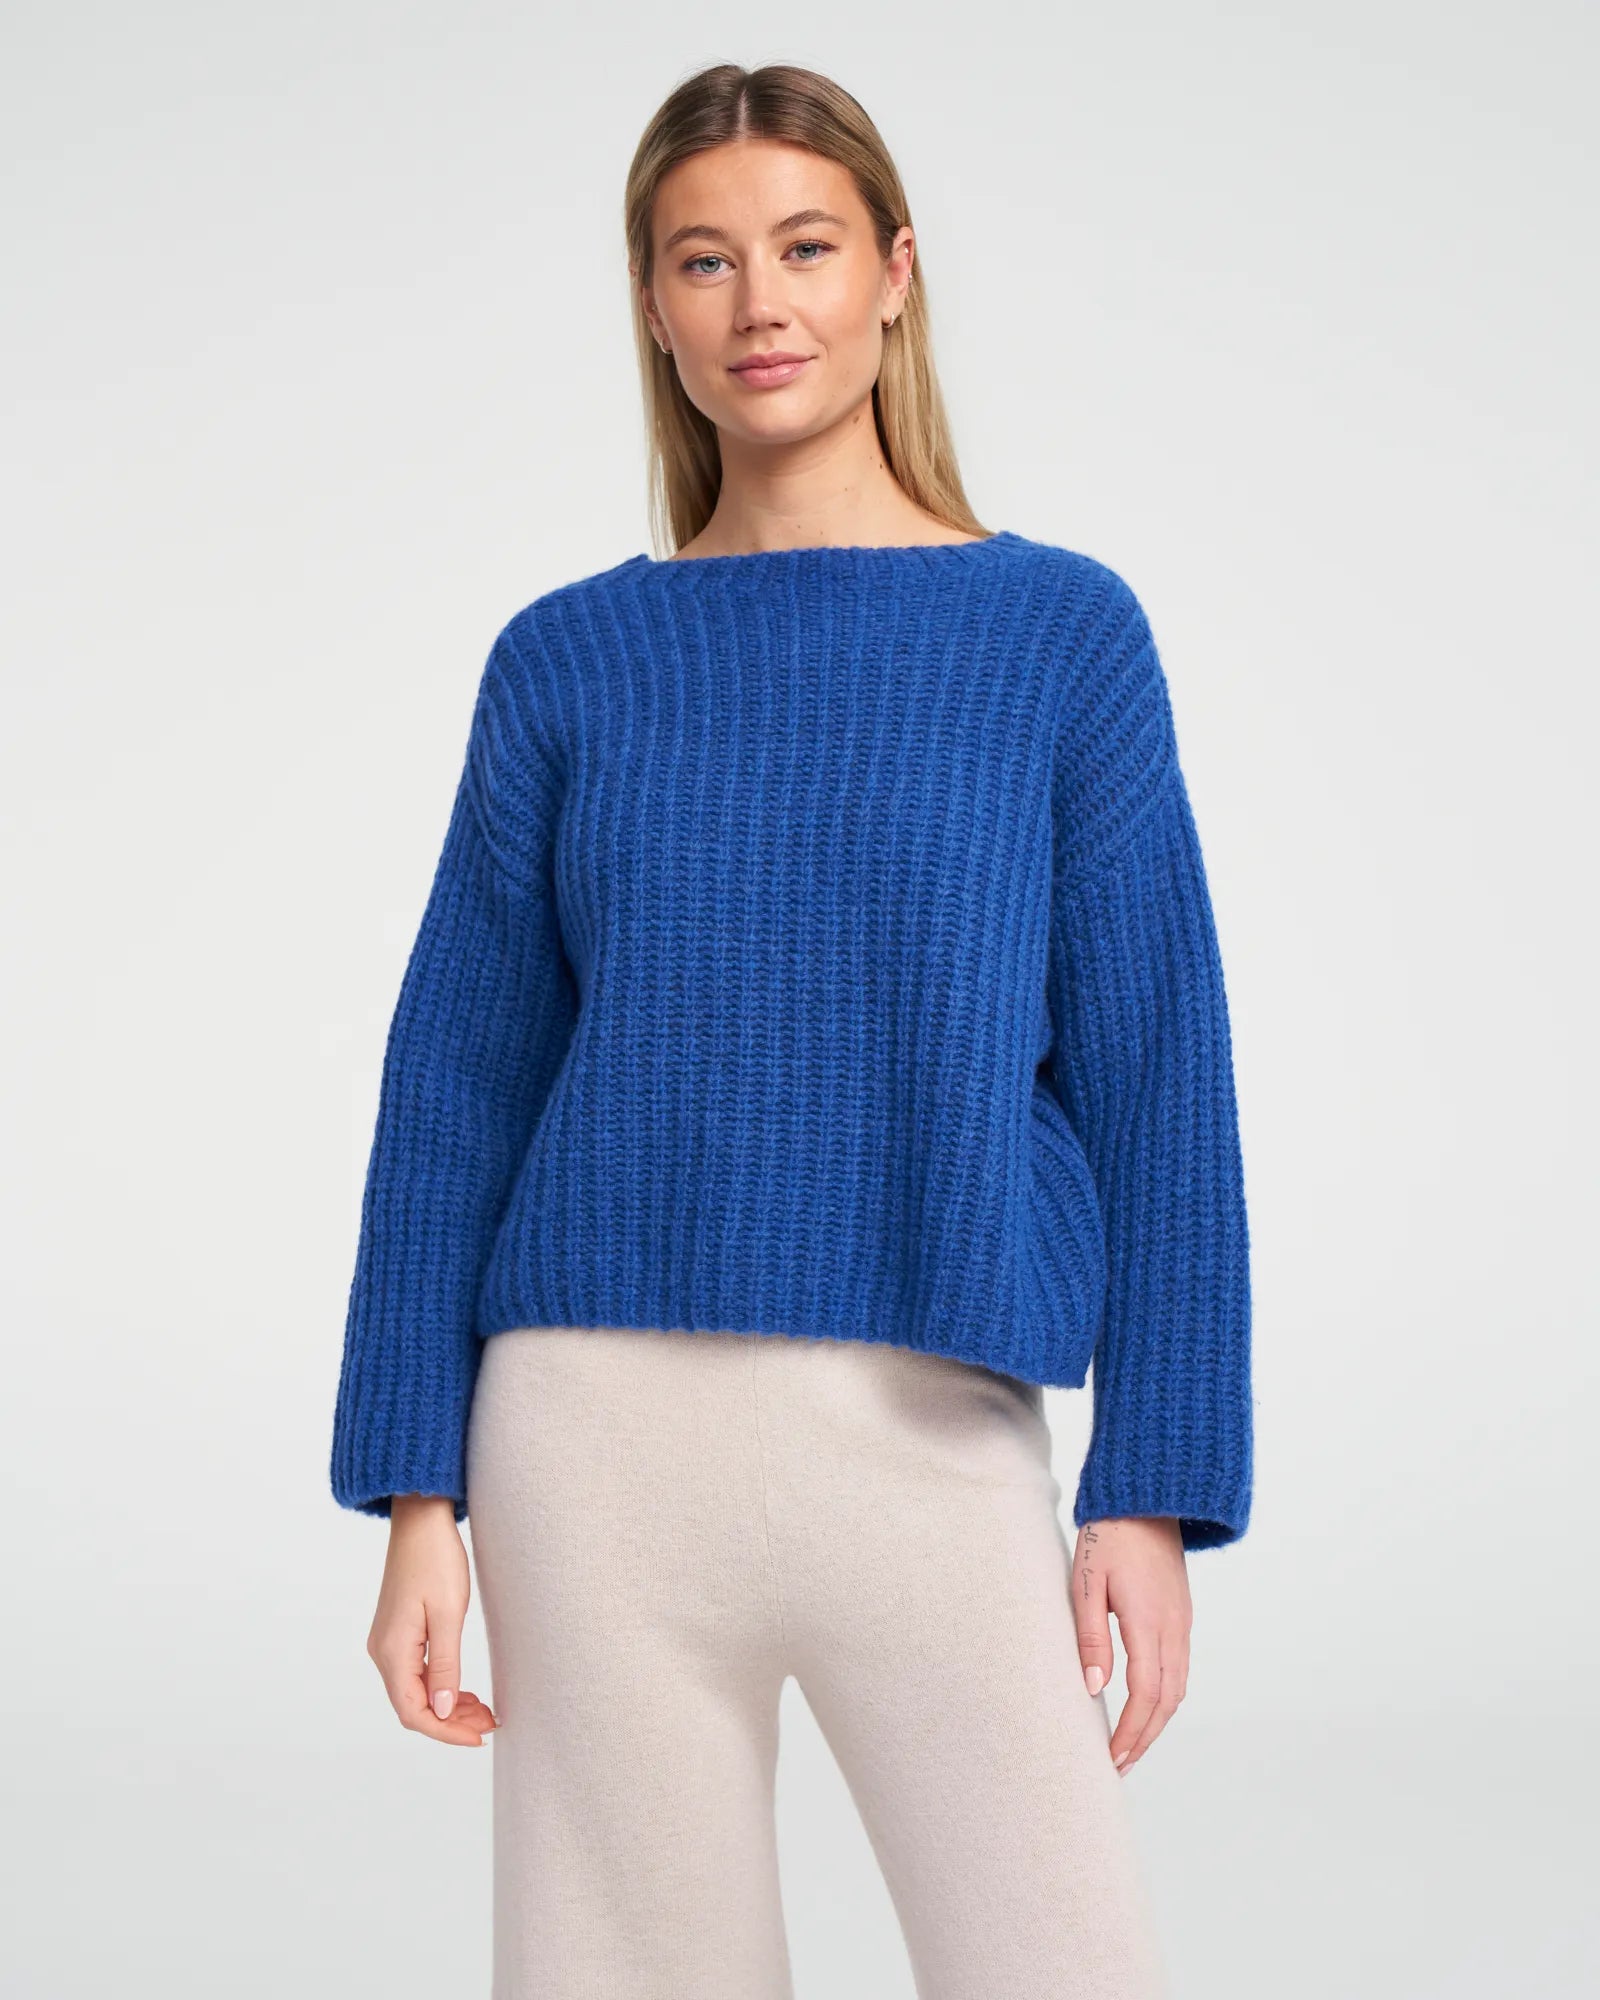 Cajsa Super Soft Knitted Sweater - Cobalt Blue